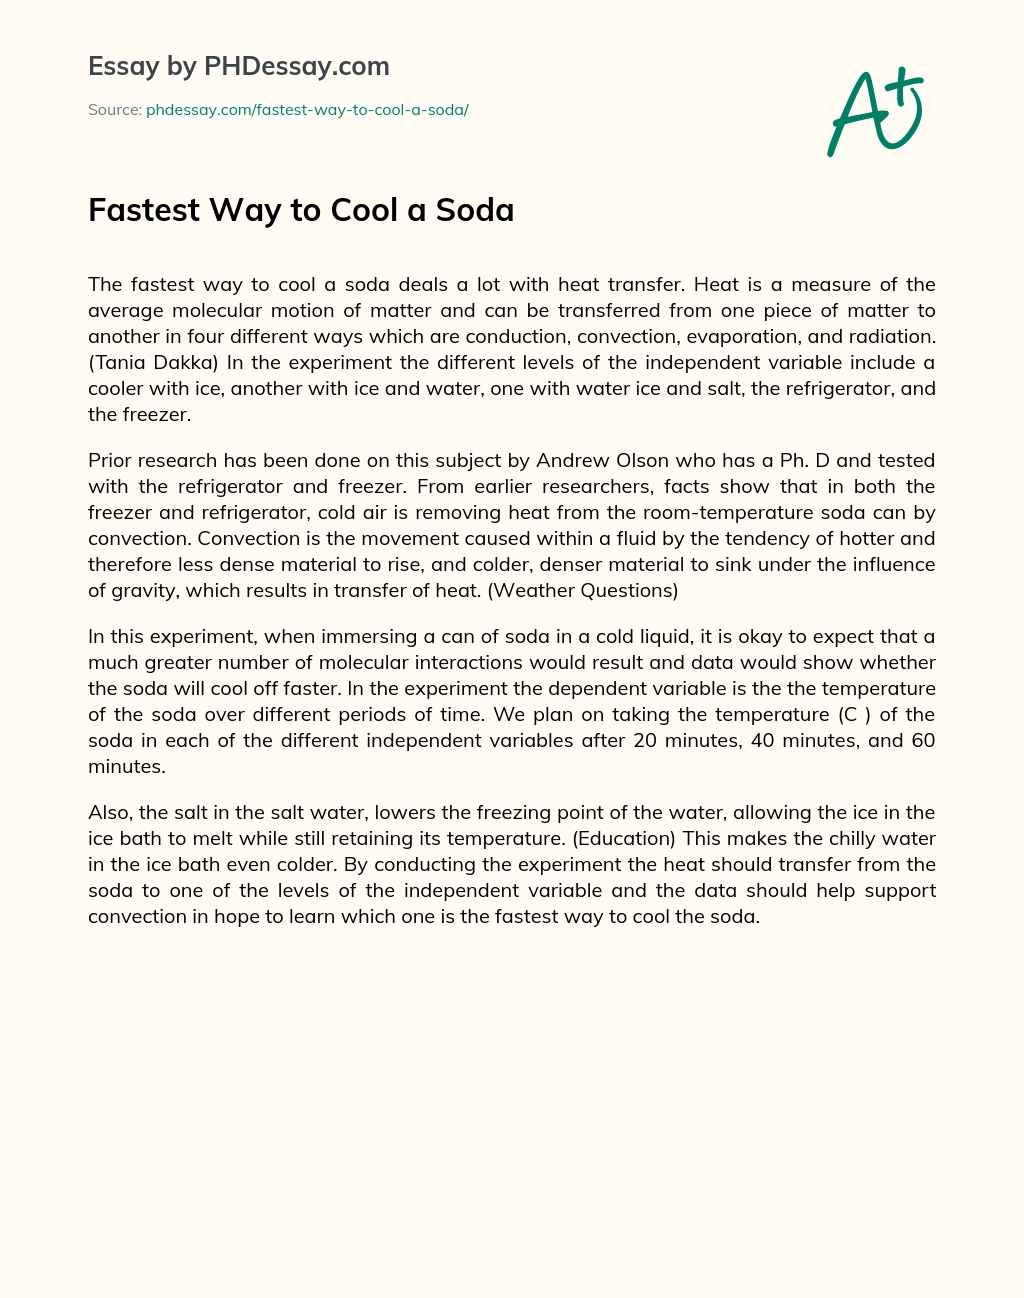 Fastest Way to Cool a Soda essay